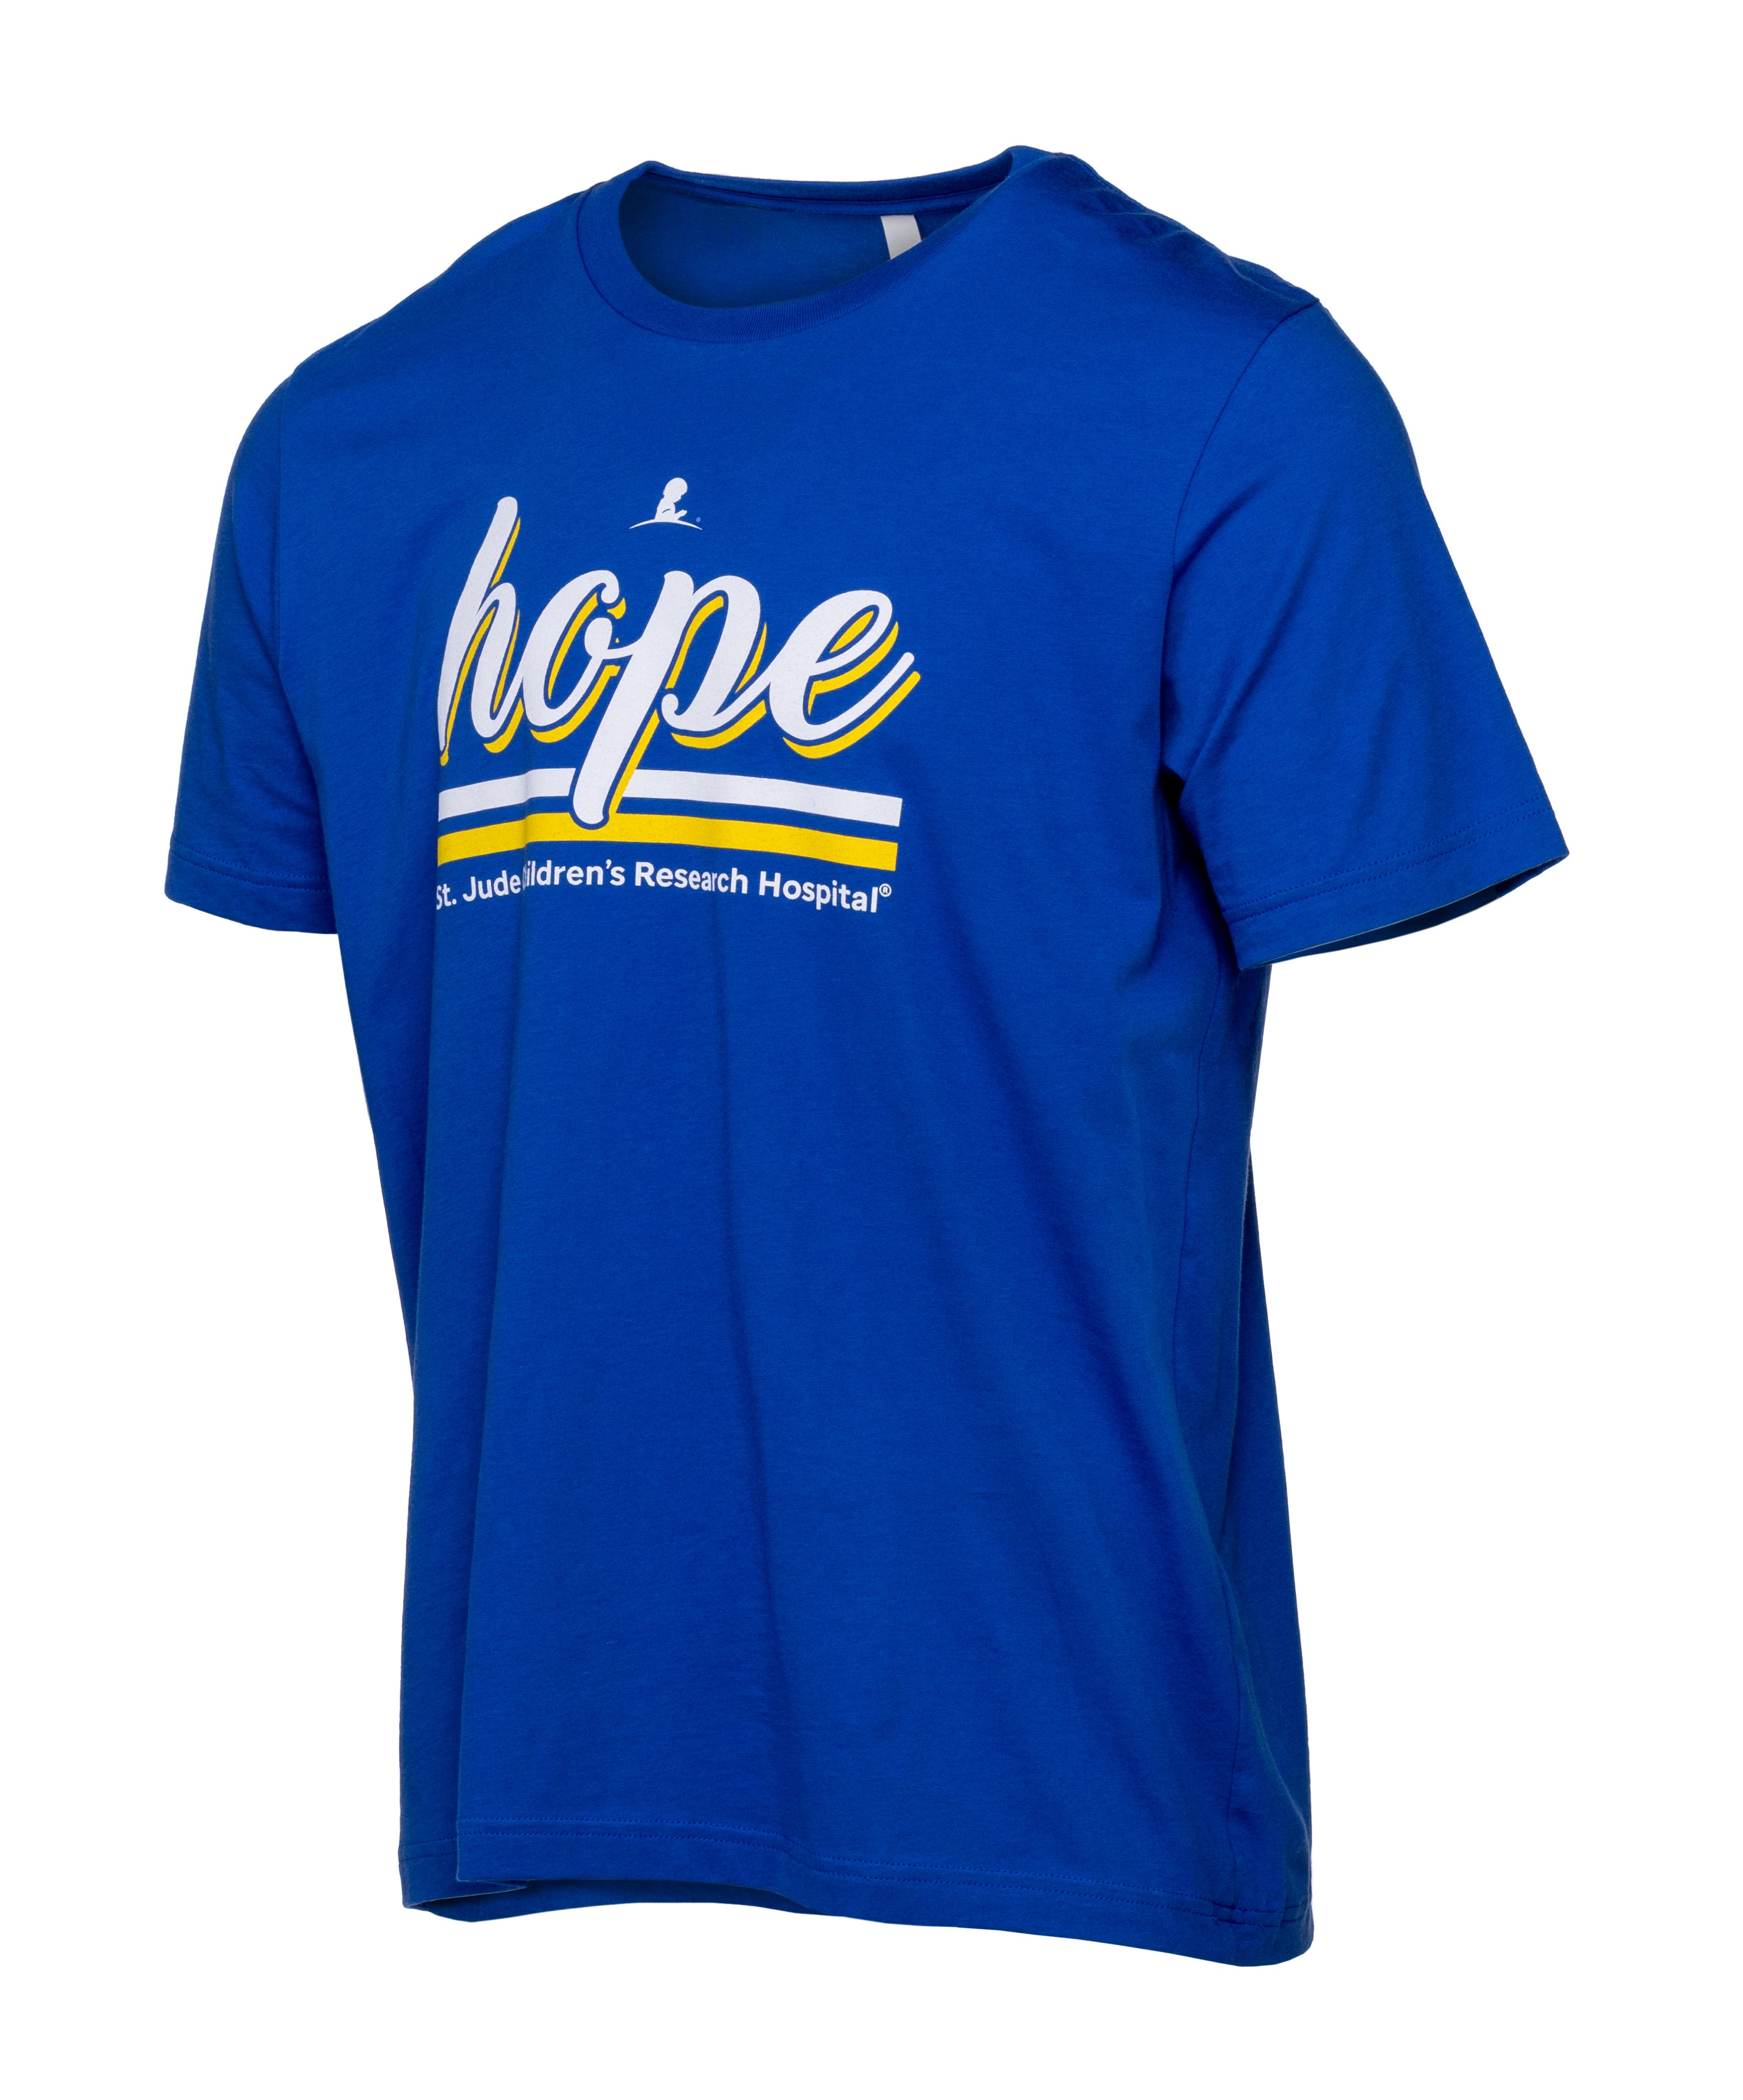 St. Jude Hope Collegiate T-Shirt